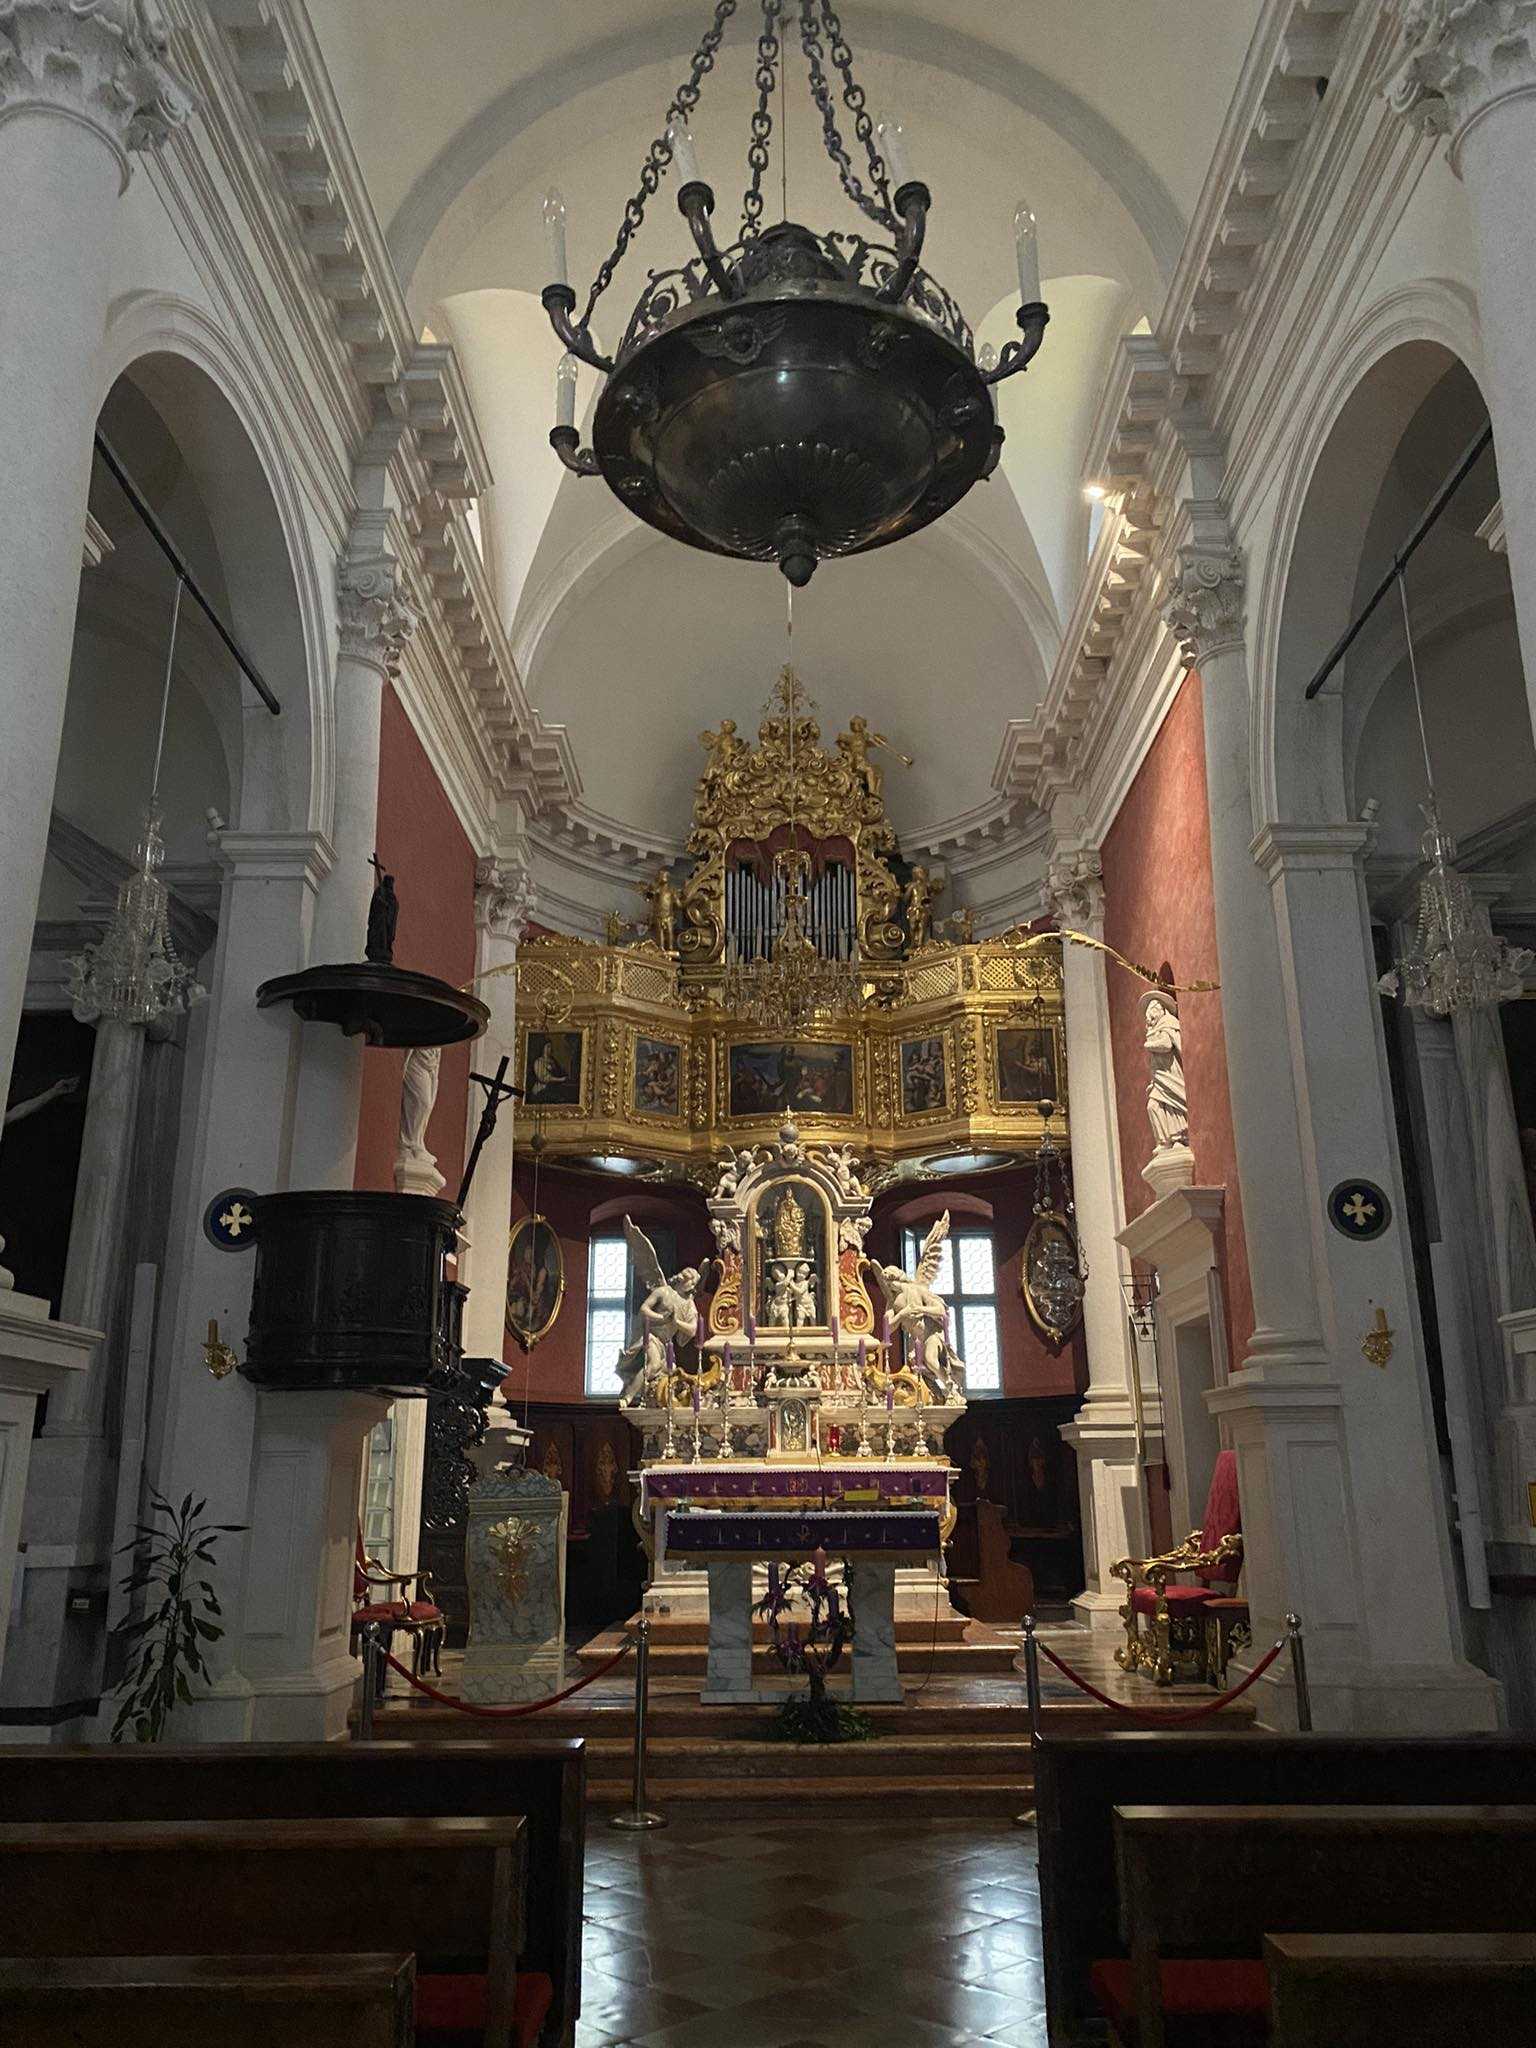 Saint Blaise’s Church, Dubrovnik